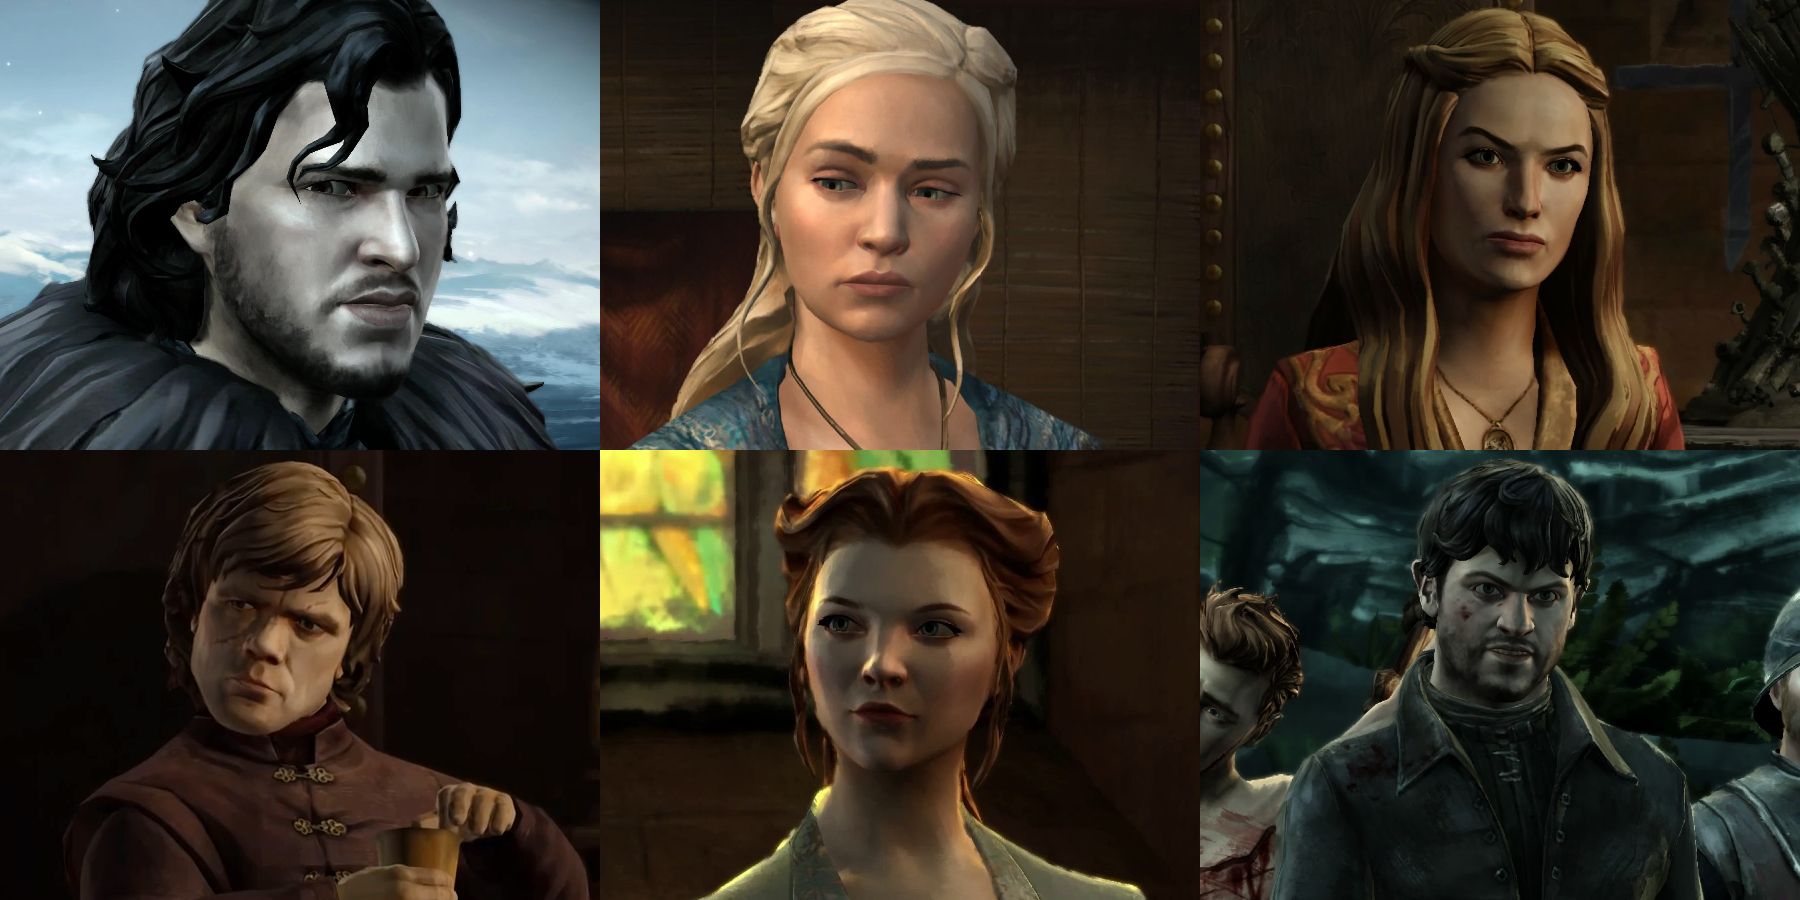 Jon Snow, Daenerys Targaryen, Cersei Lannister, Tyrion Lannister, Margaery Tyrell, and Ramsay Bolton in Telltale's Game of Thrones